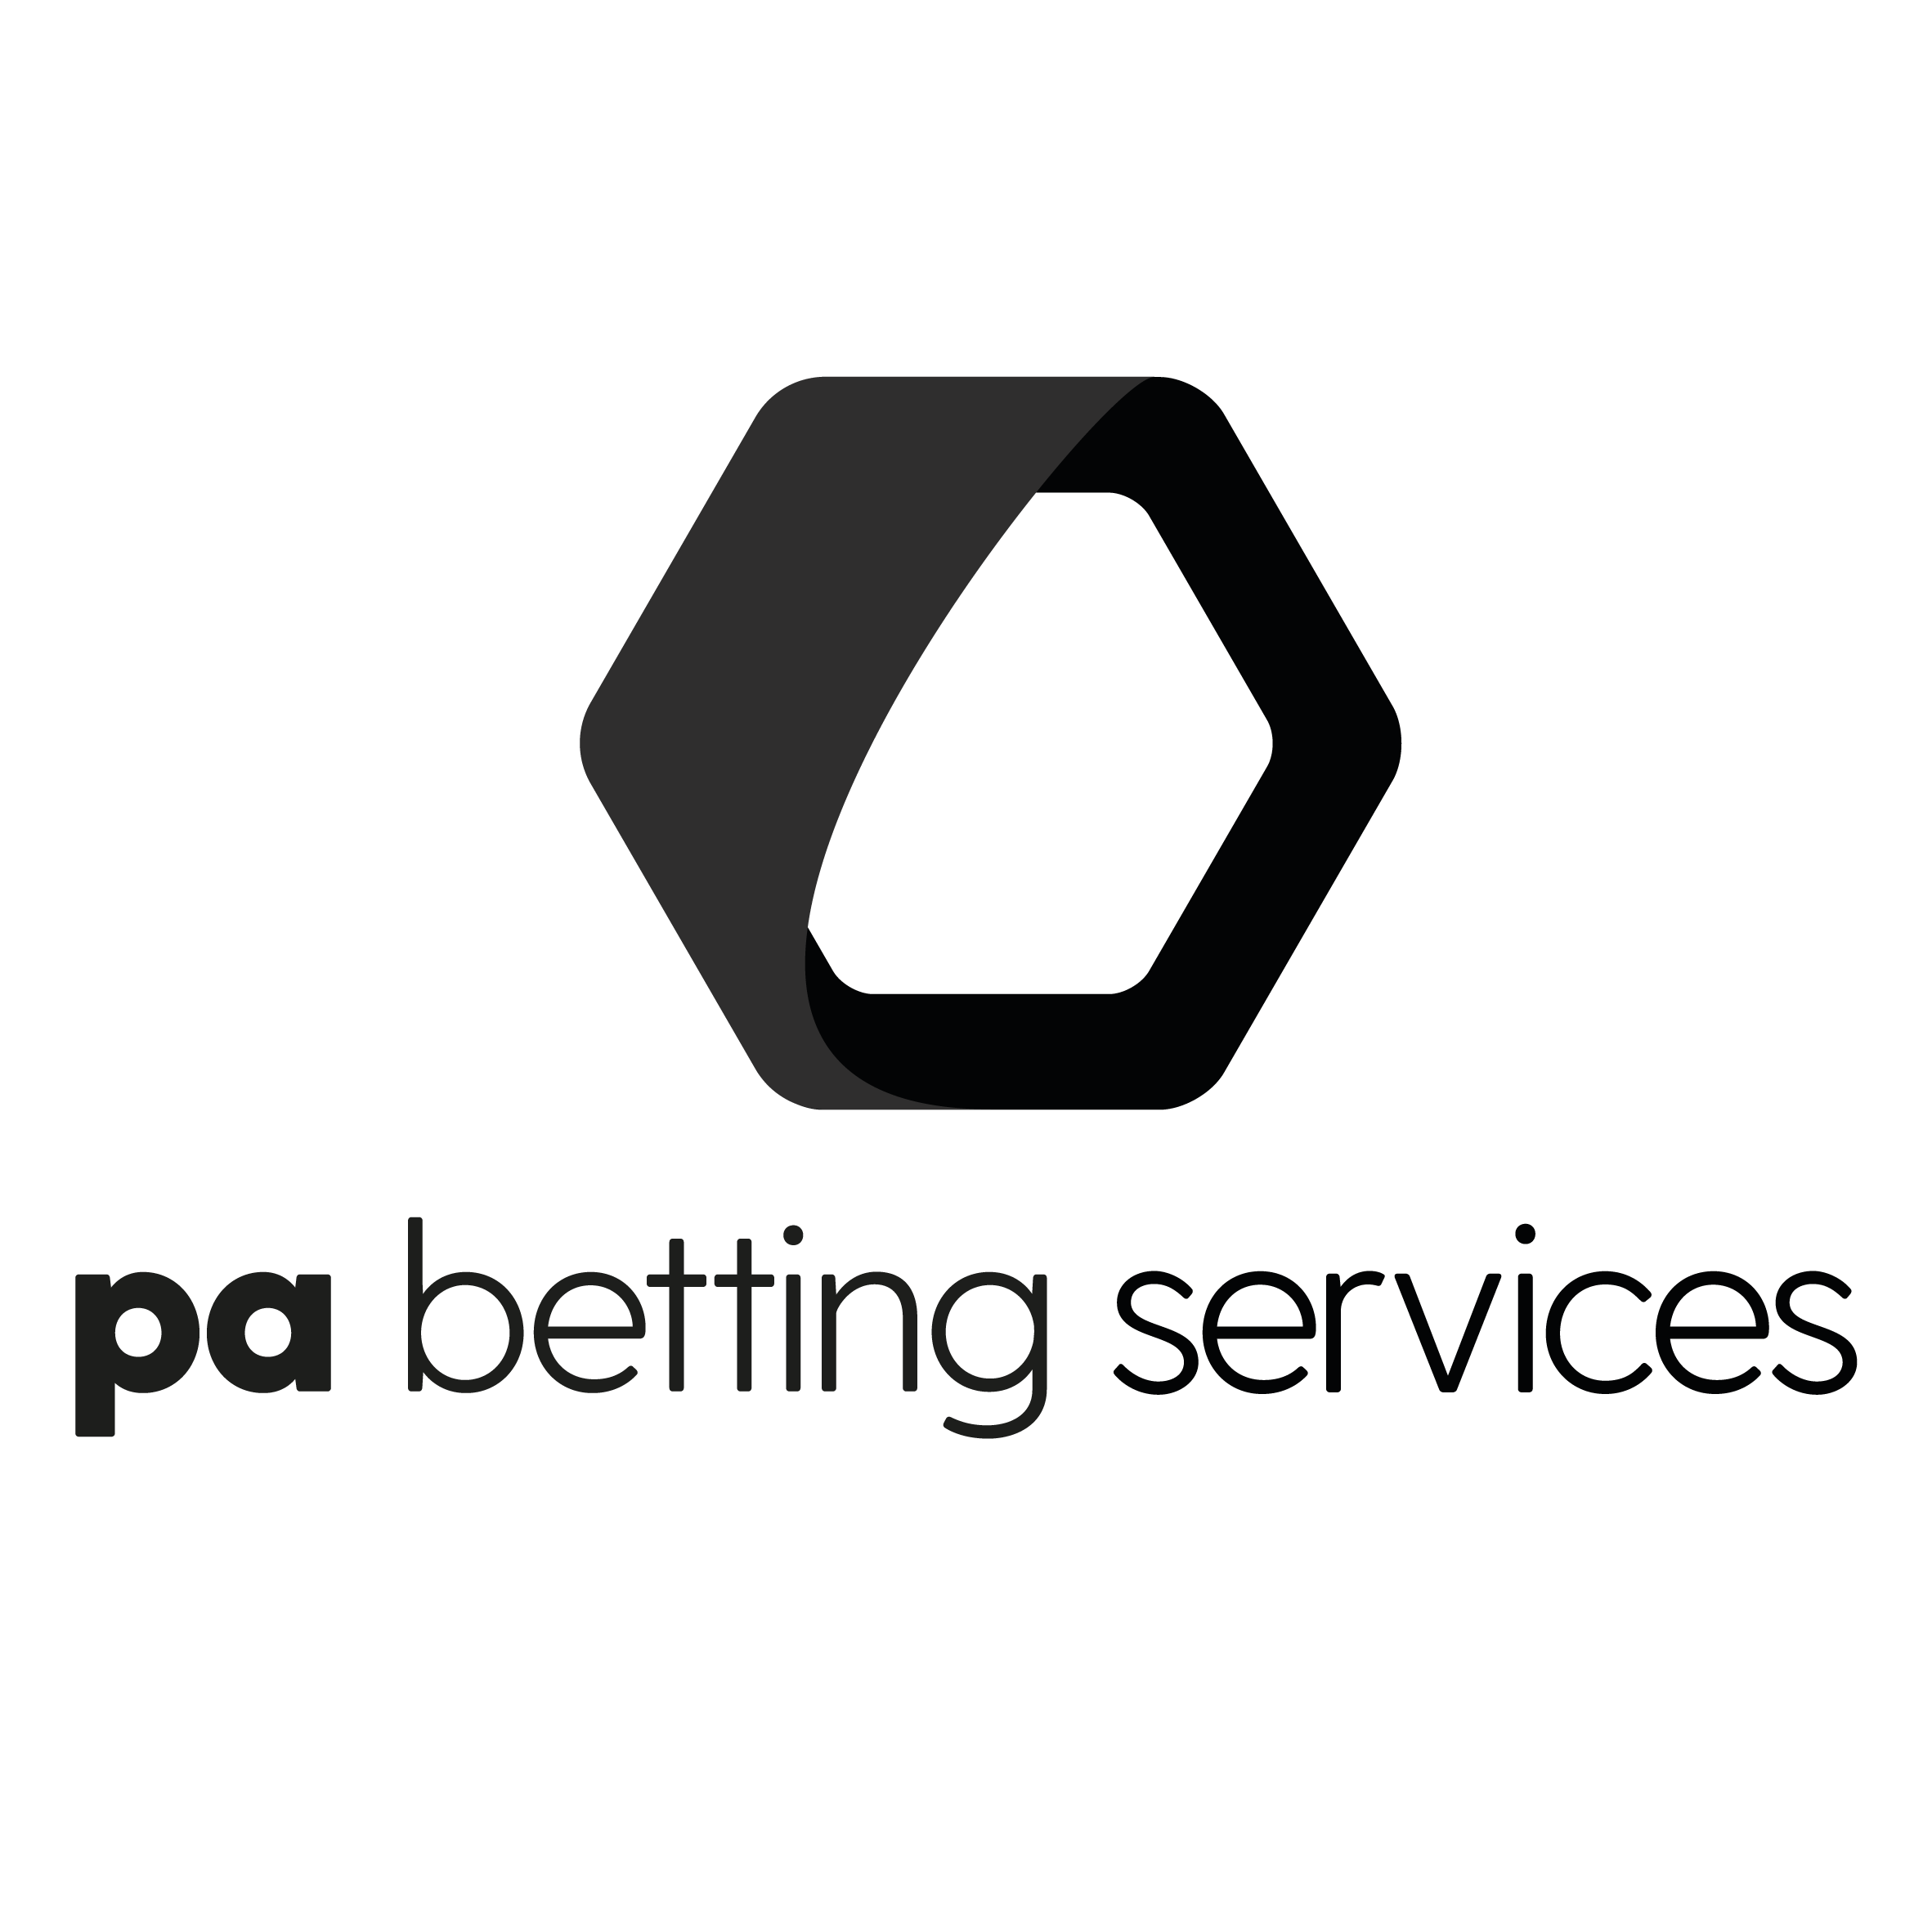 PA Betting Logo Square.png